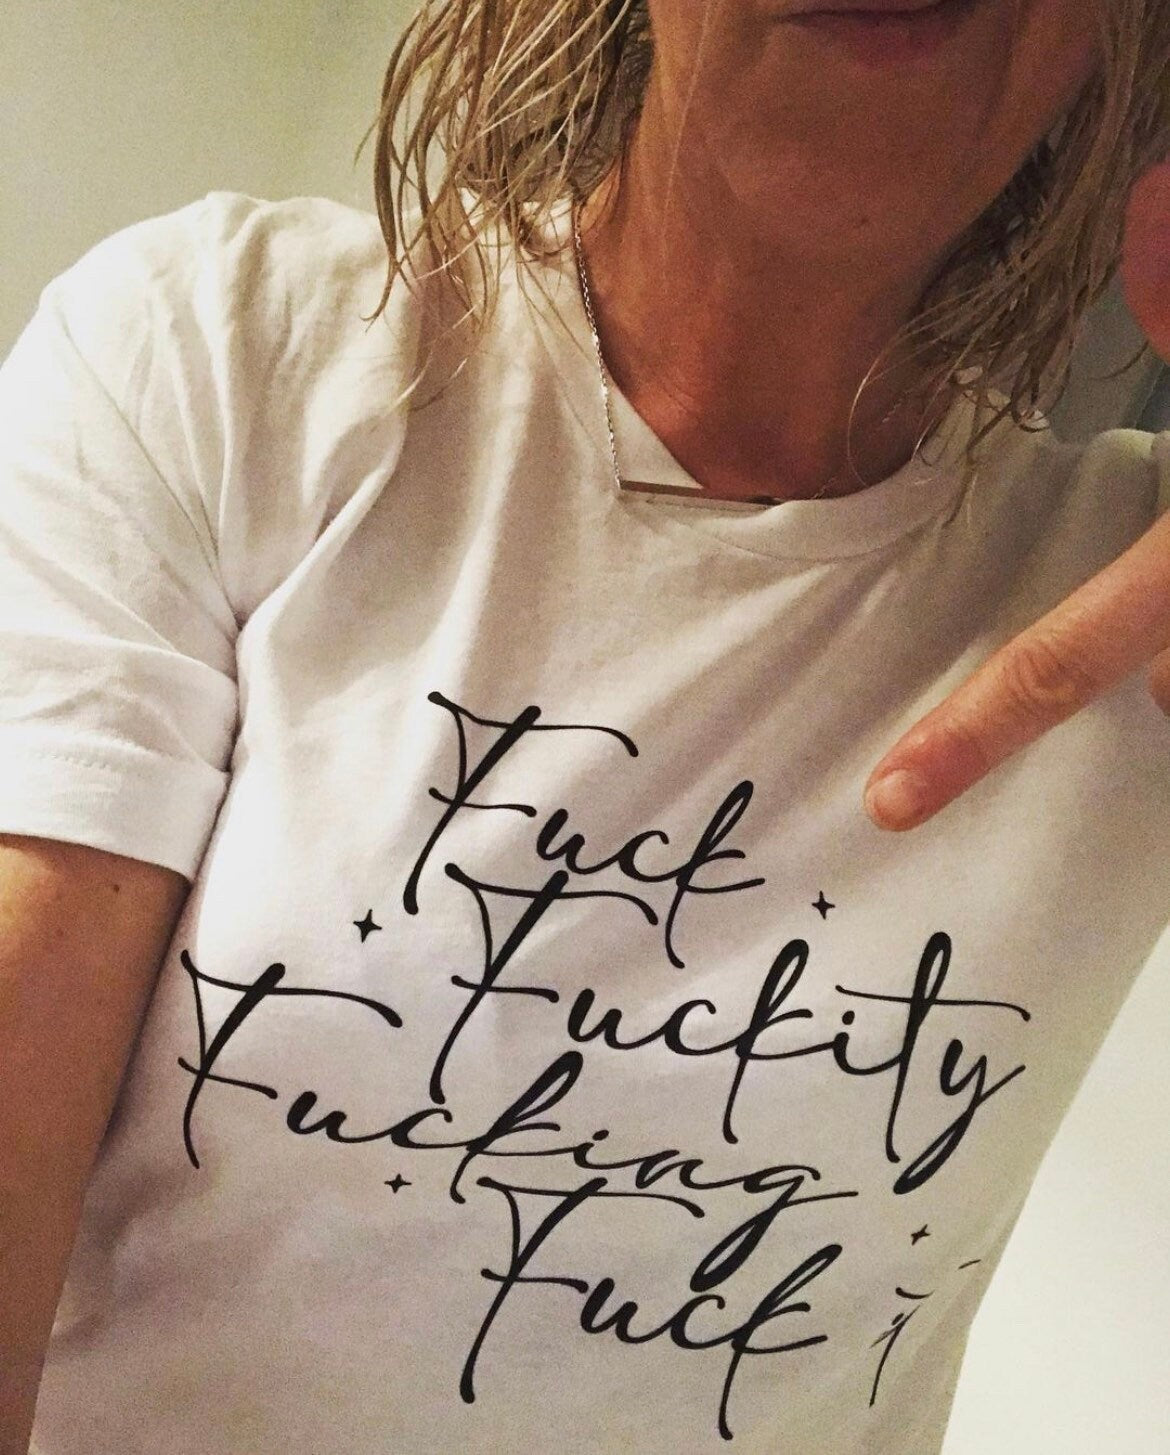 Fuck, Fuckity, Fucking , Fuck it Slogan T-shirt | Explict | Profanity | Rude | Cheeky | Organic Cotton Tee